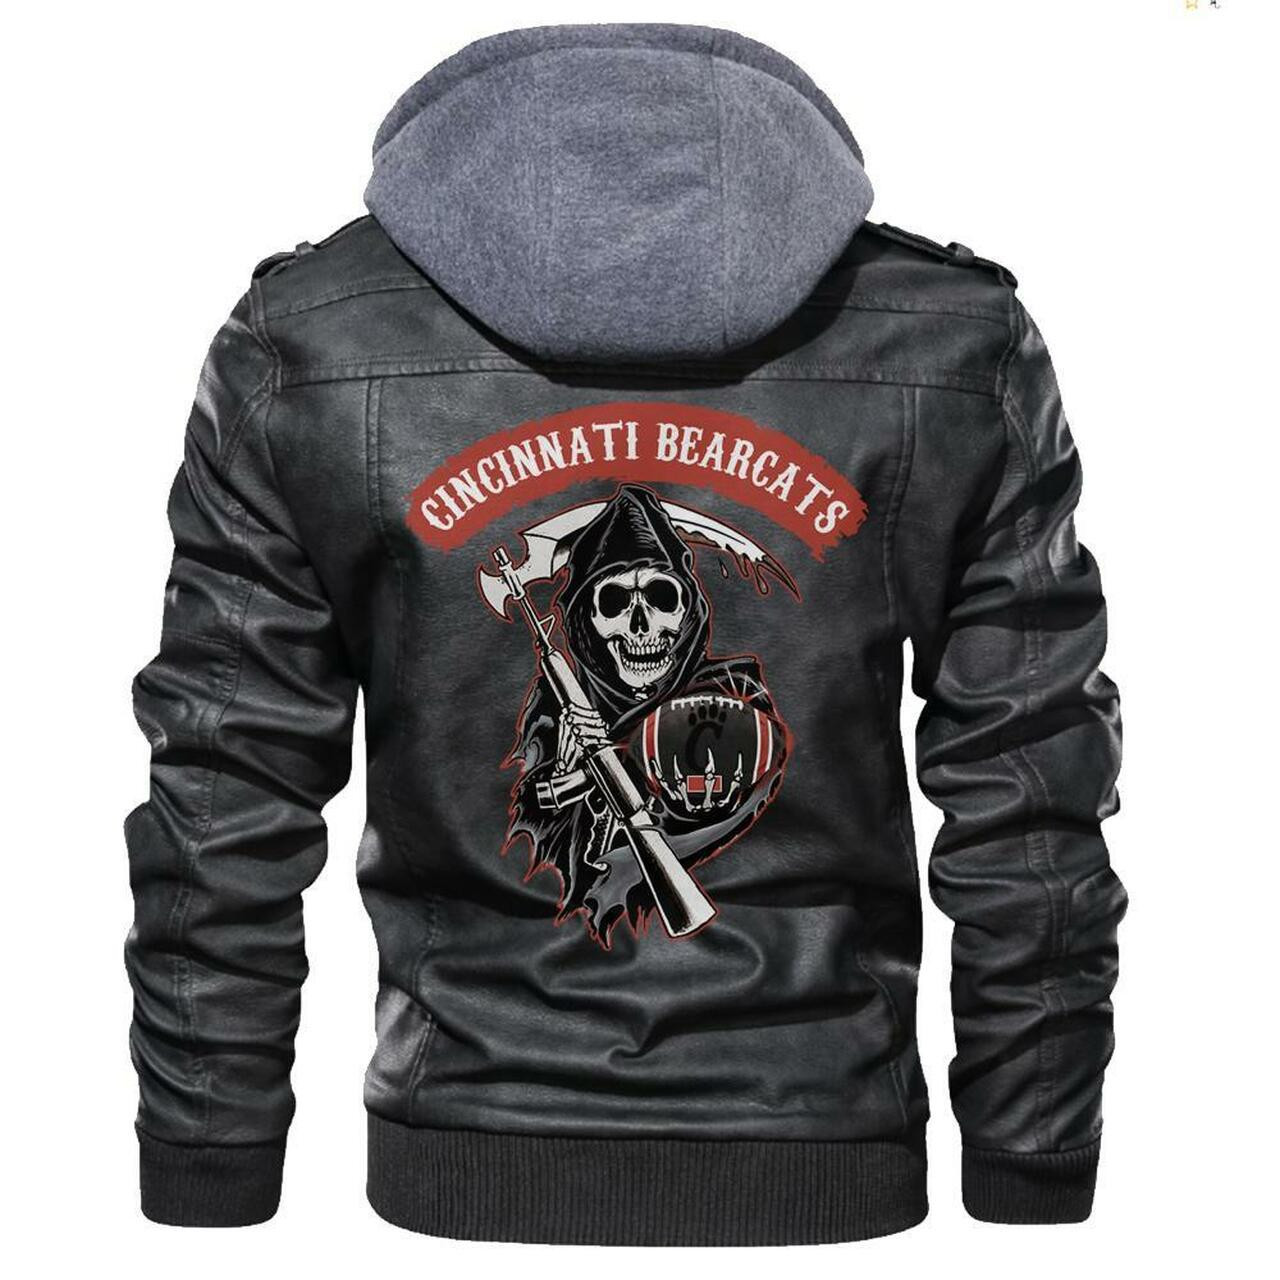 Top leather jacket Sells Best on Techcomshop 121